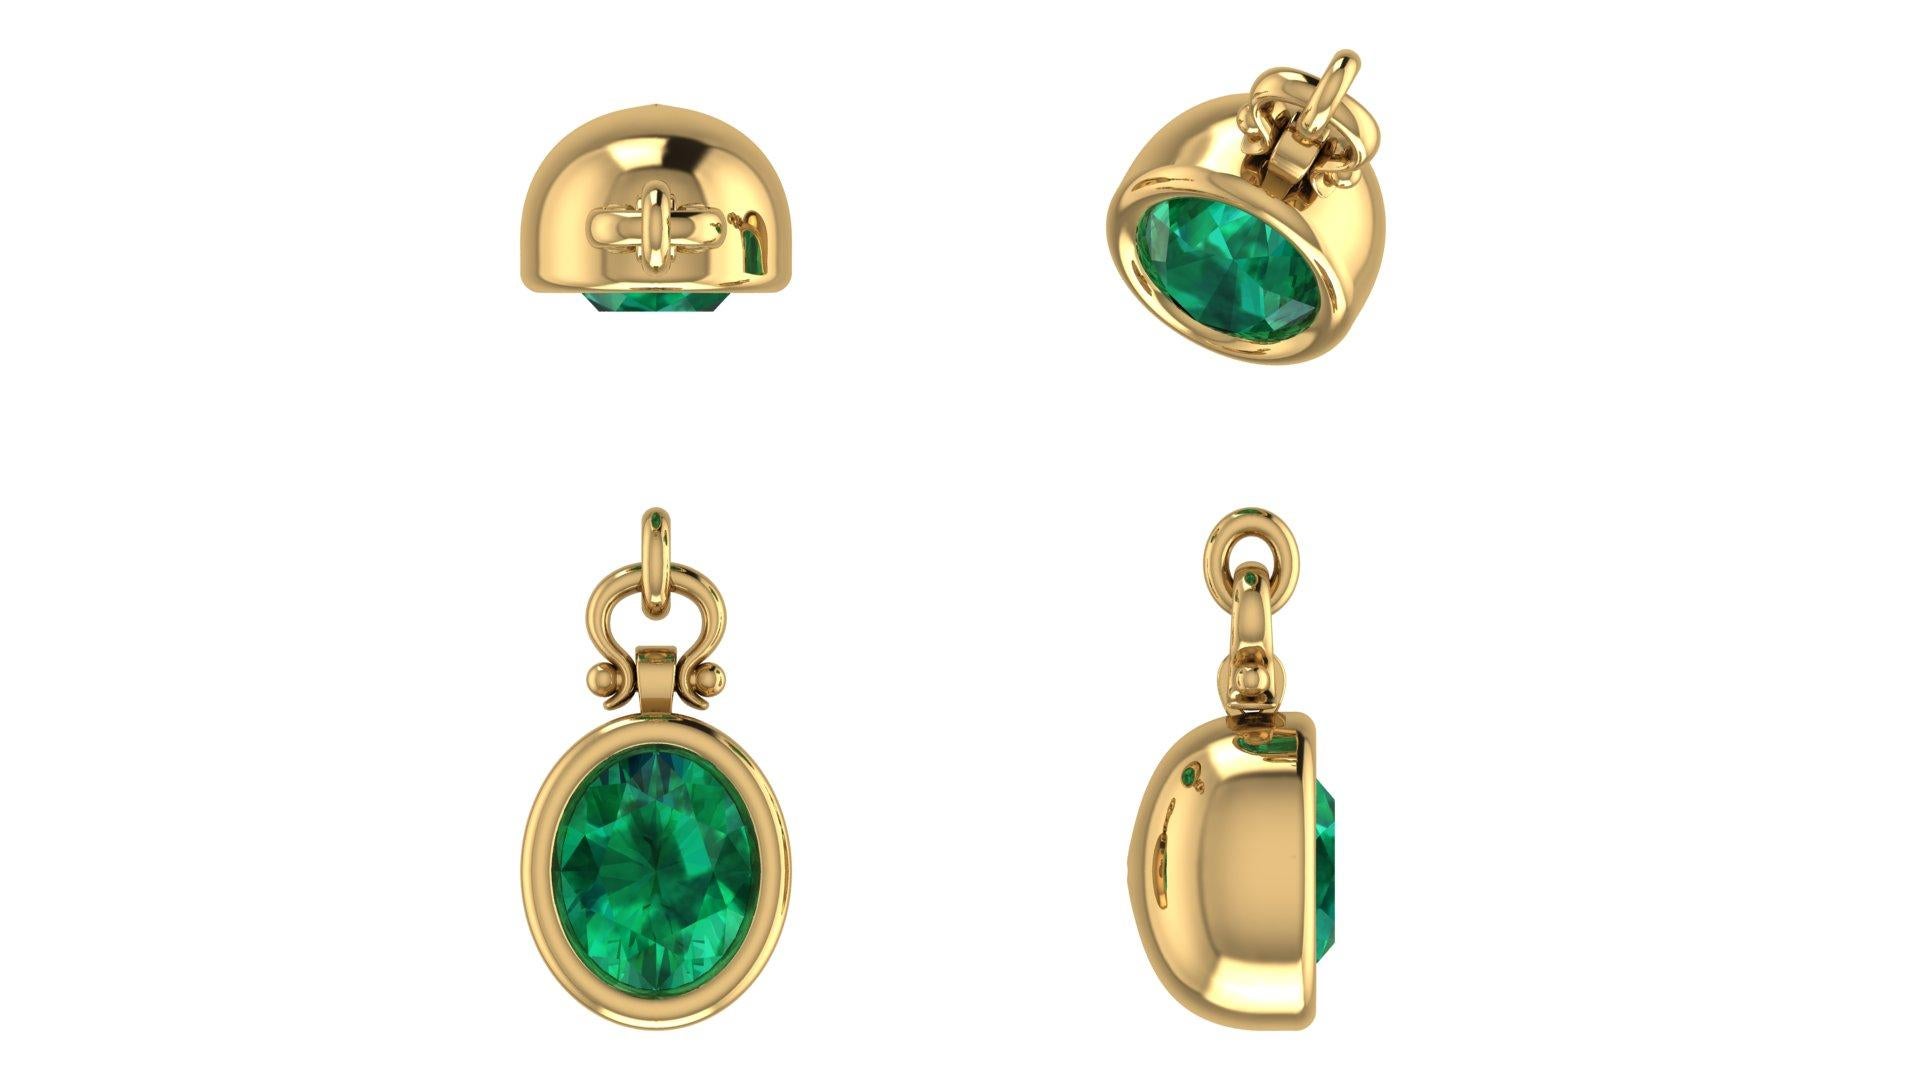 IGITL Certified 2.4 Carat Oval Cut Emerald Pendant Necklace in 18k For Sale 4